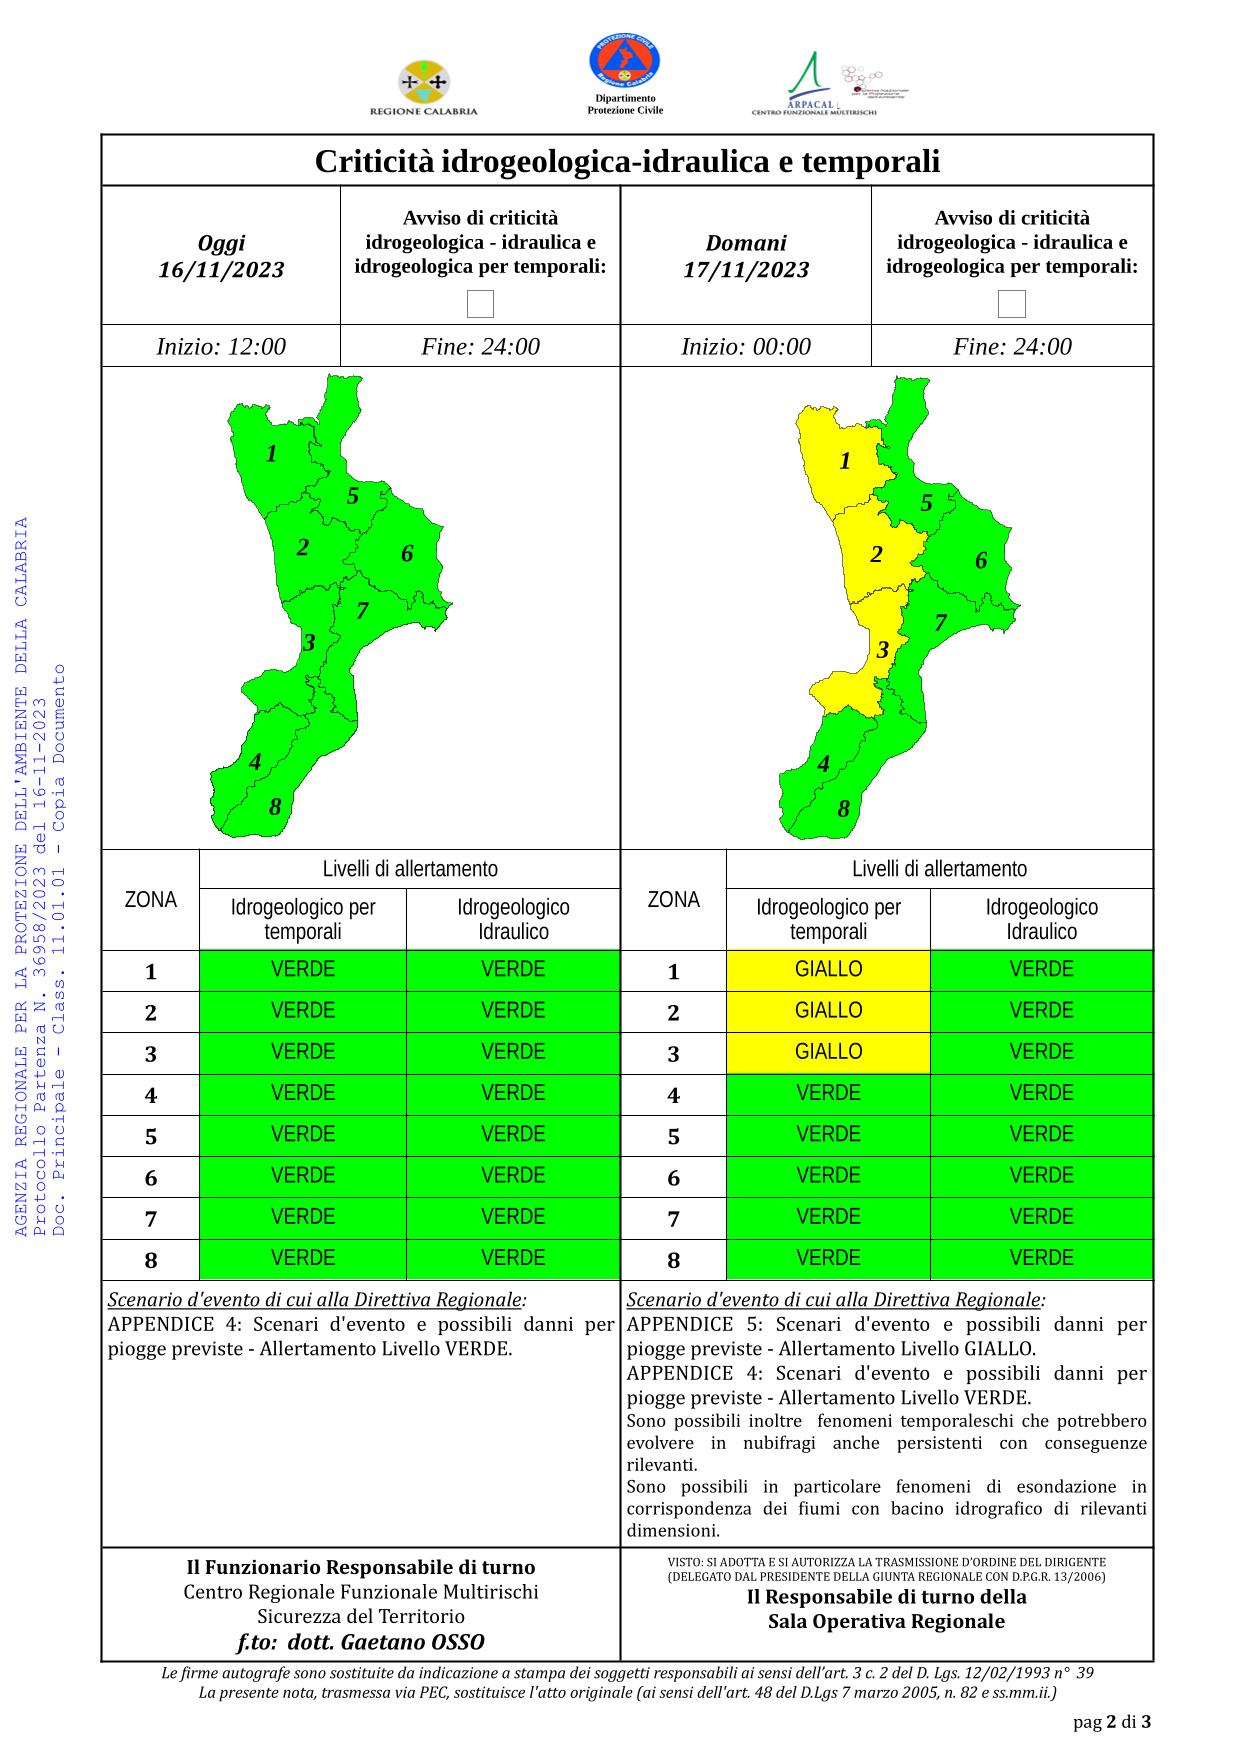 Criticità idrogeologica-idraulica e temporali in Calabria 16-11-2023